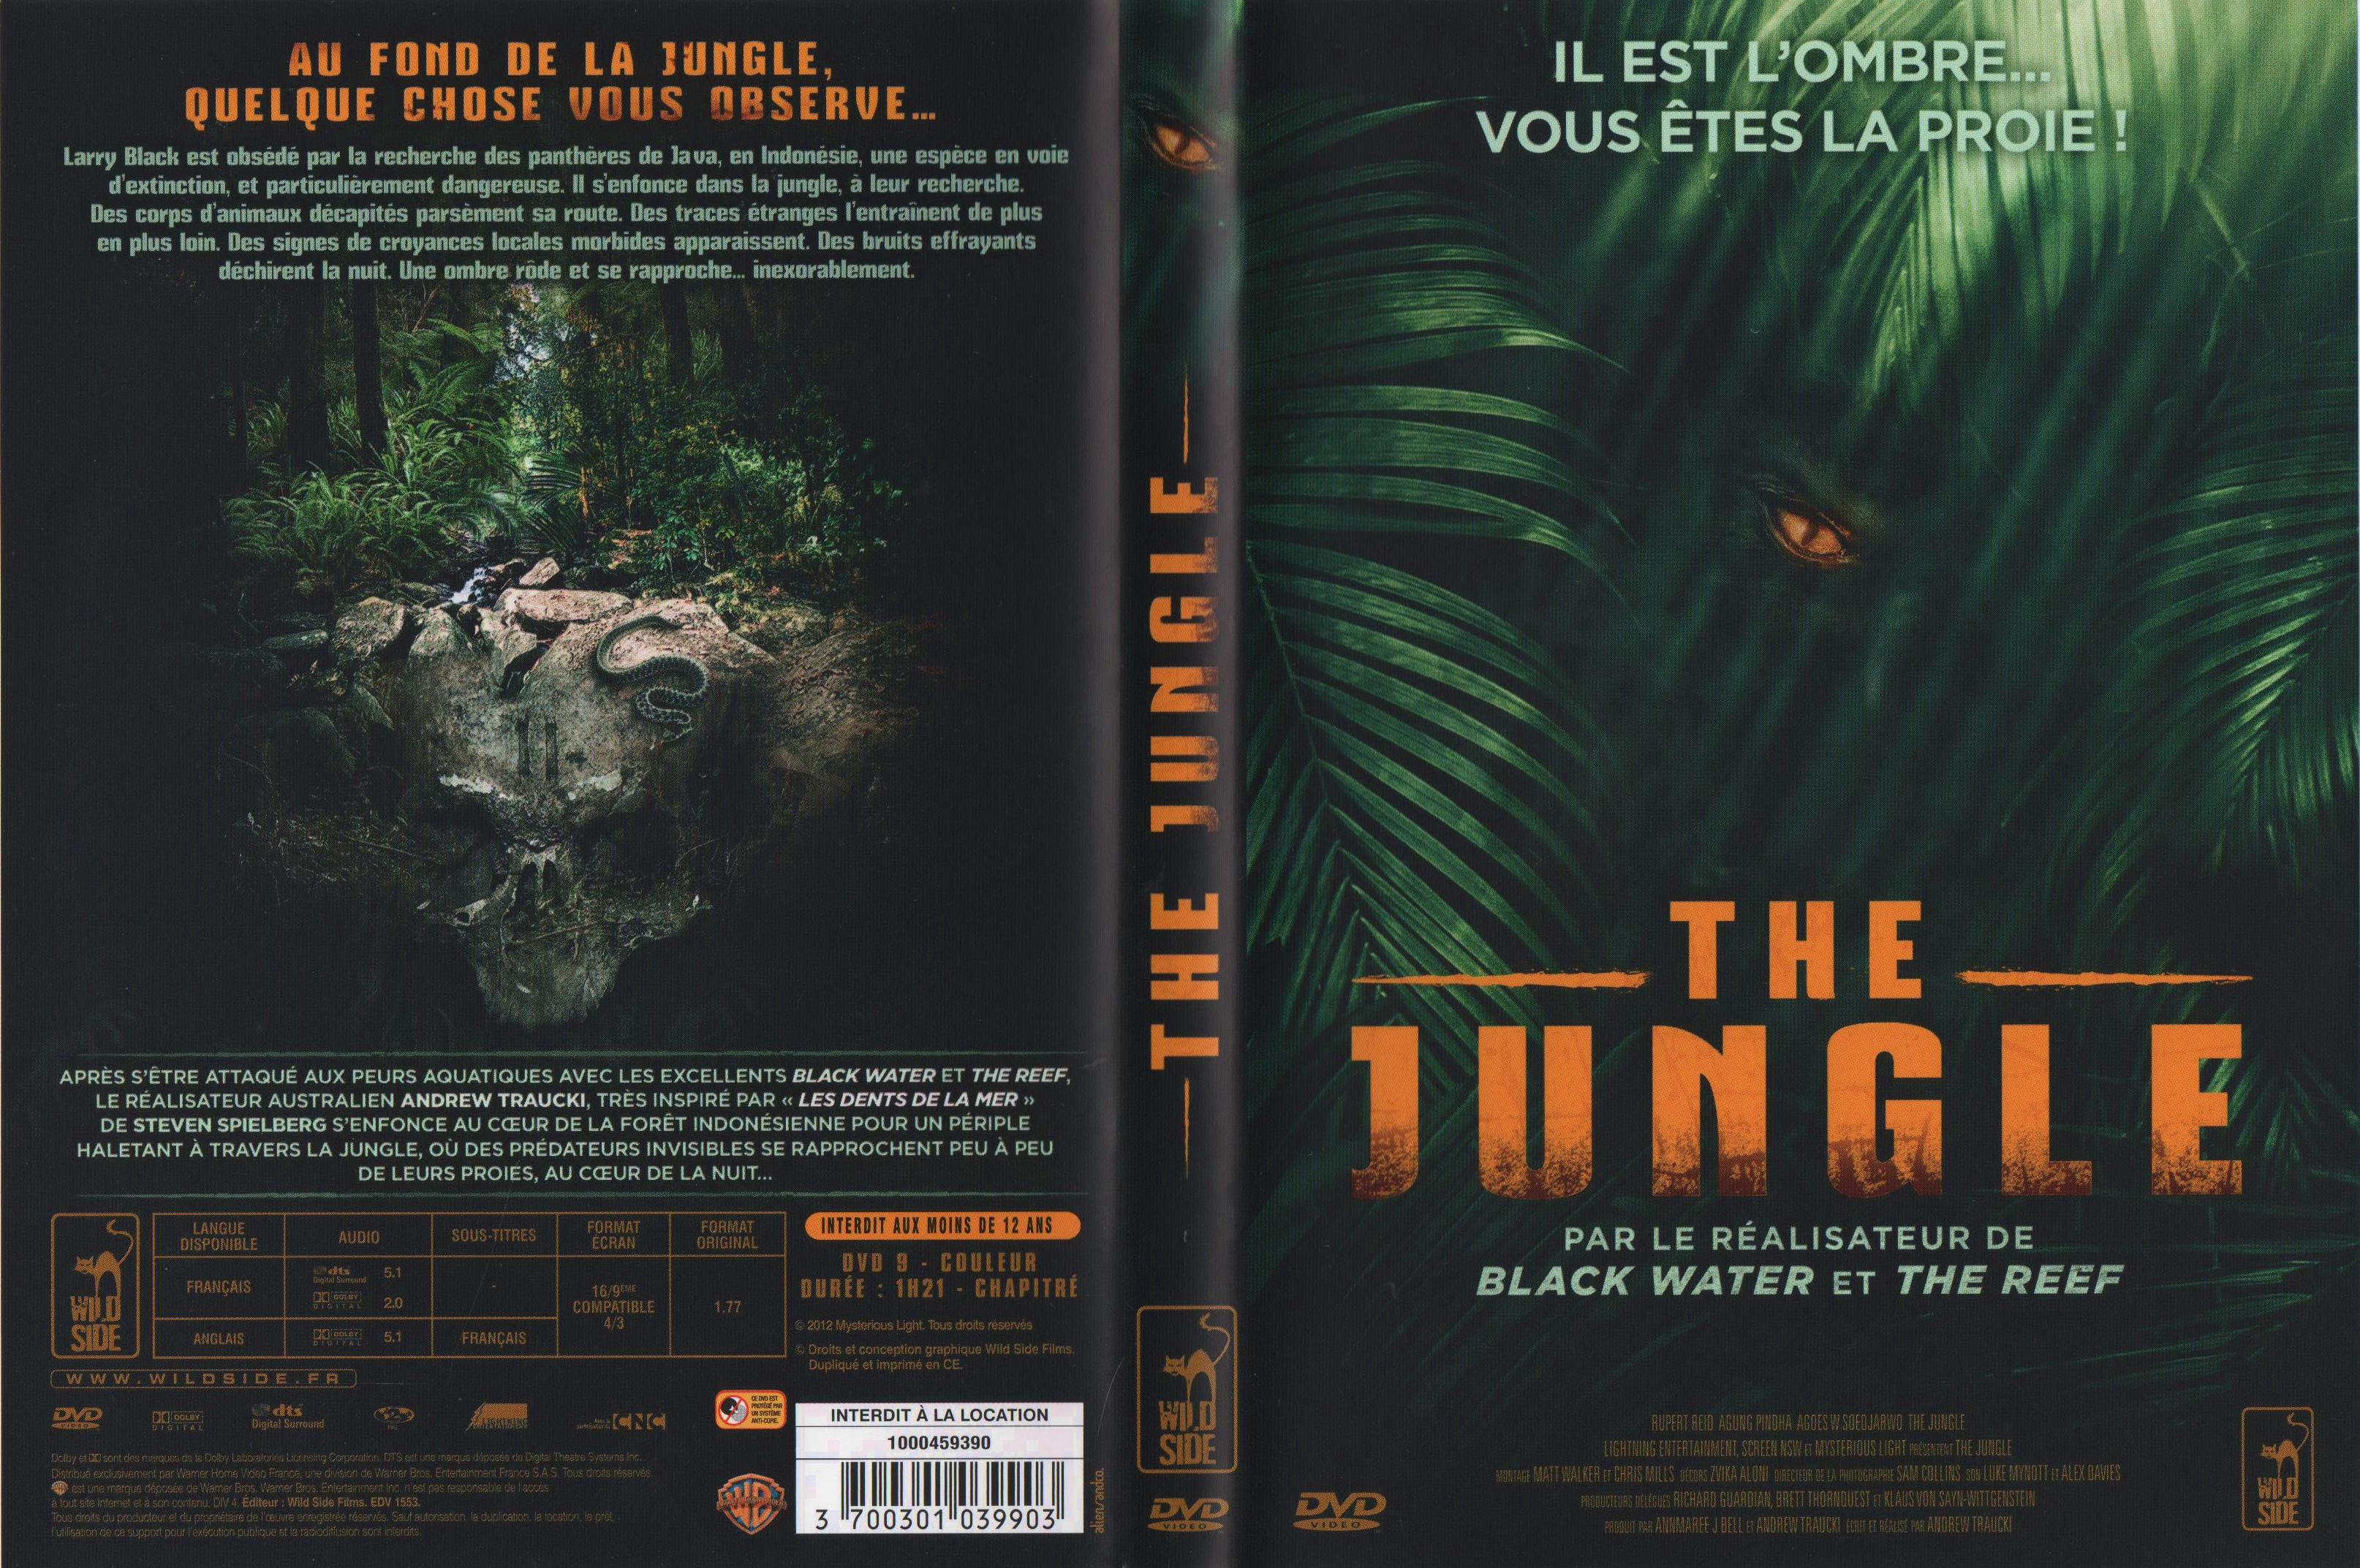 Jaquette DVD The jungle